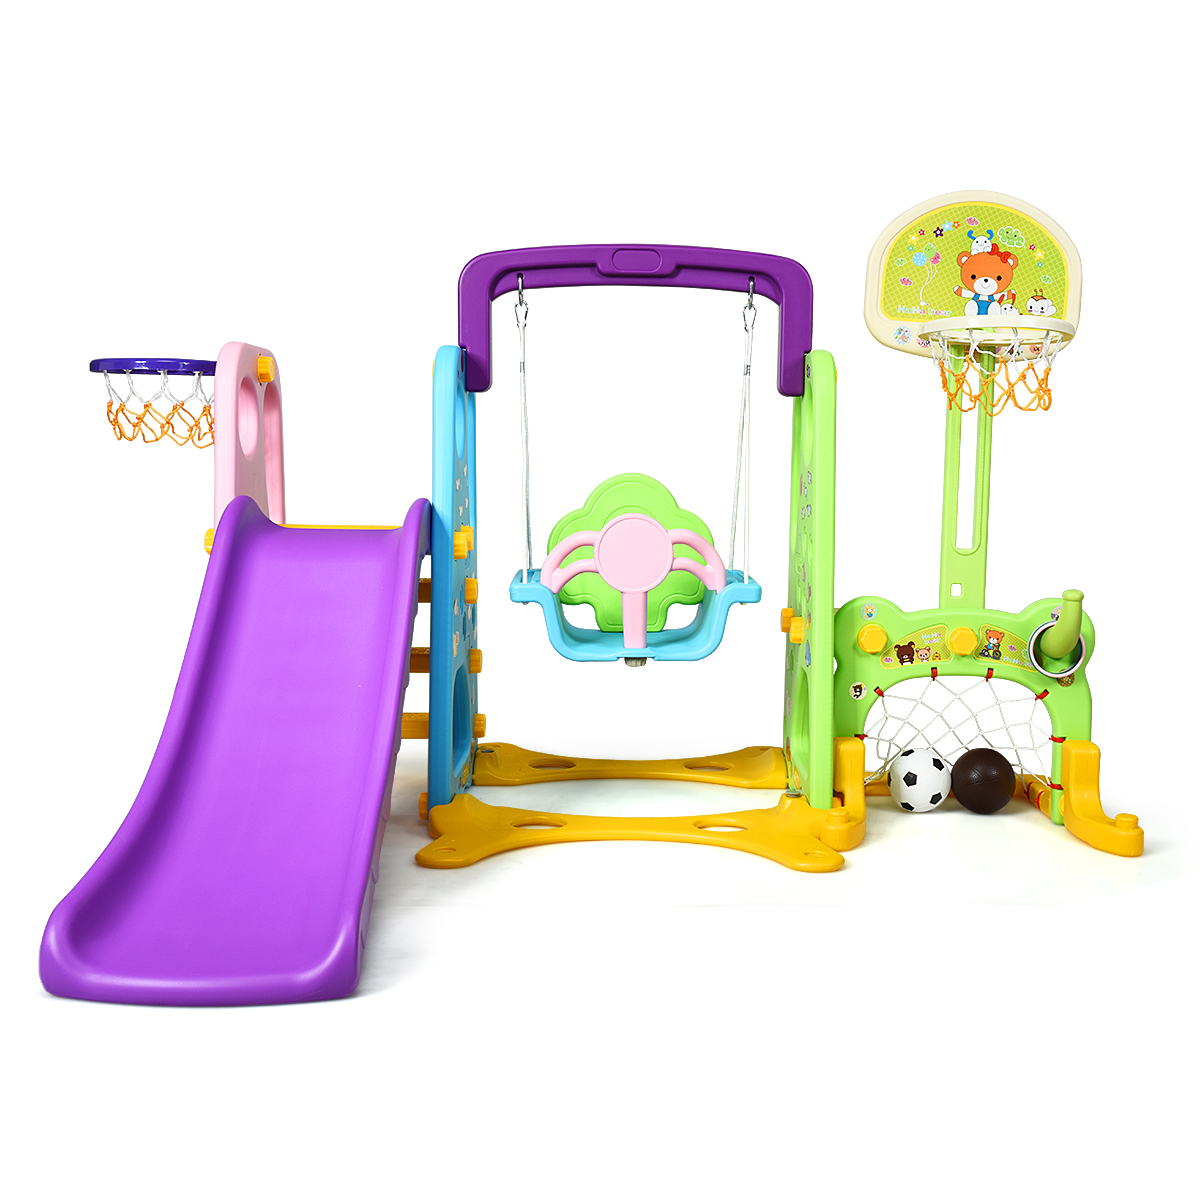 6 in 1 Kids Multifunctional Play Set with Slide, Swing and Basketball Hoop